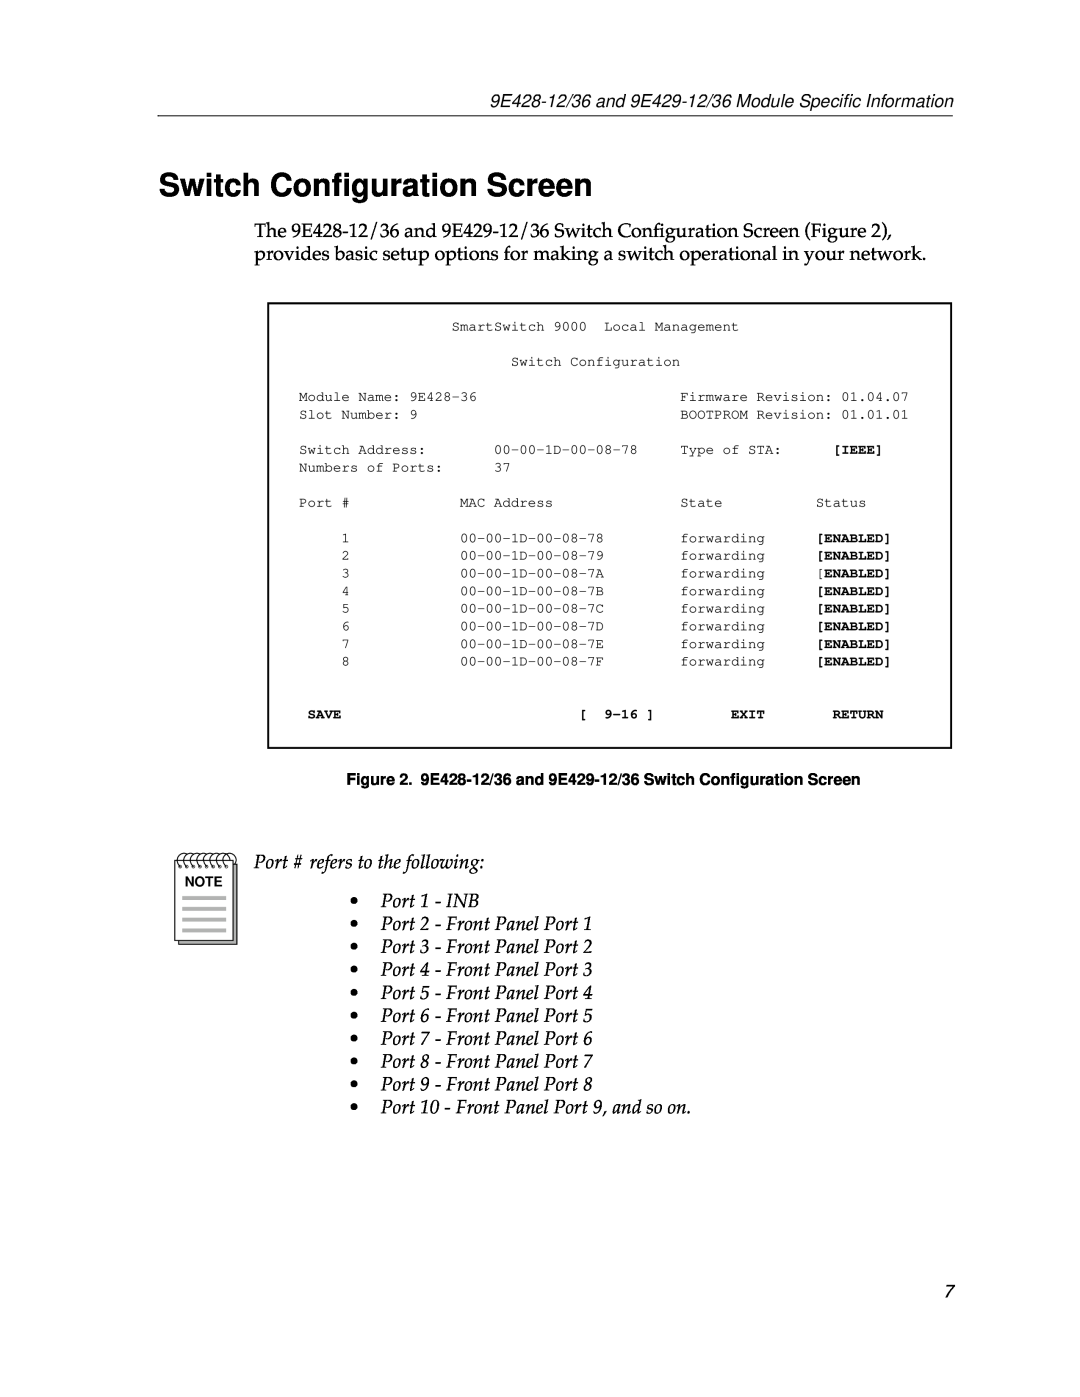 Cabletron Systems 9E428-36, 9E429-36 Switch Conﬁguration Screen, Port 3 - Front Panel Port Port 4 - Front Panel Port 